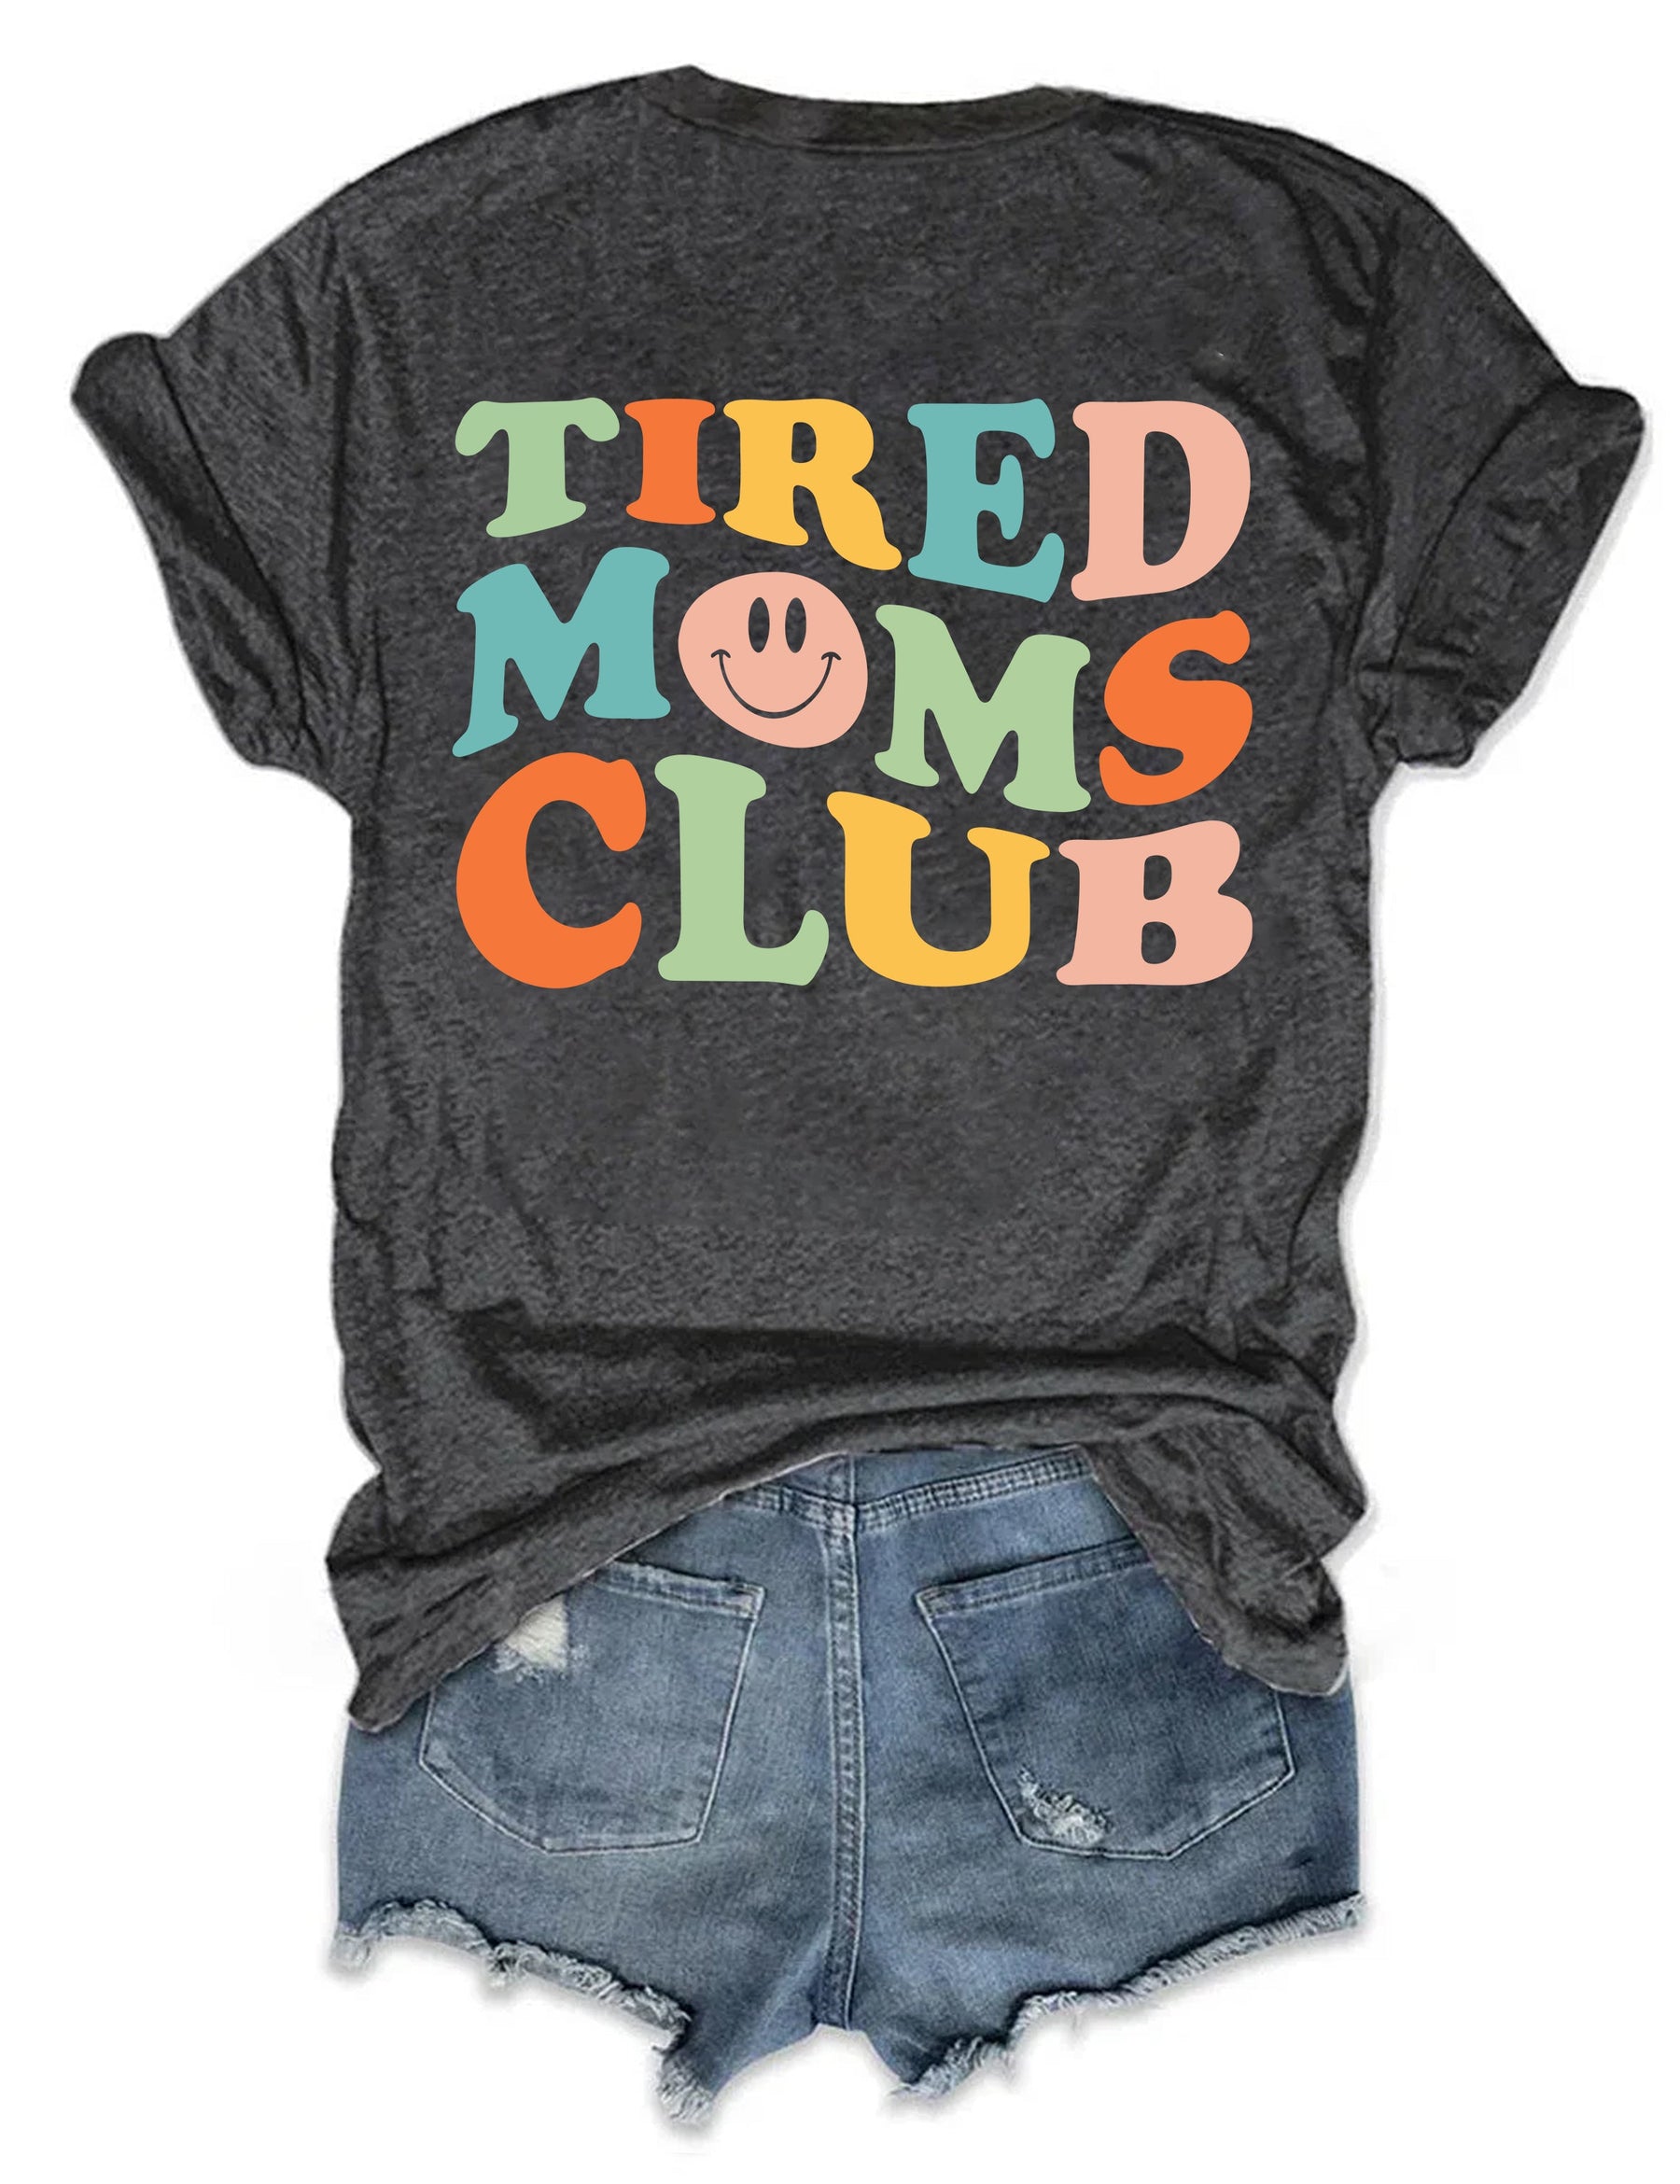 Tired Moms Club T-shirt